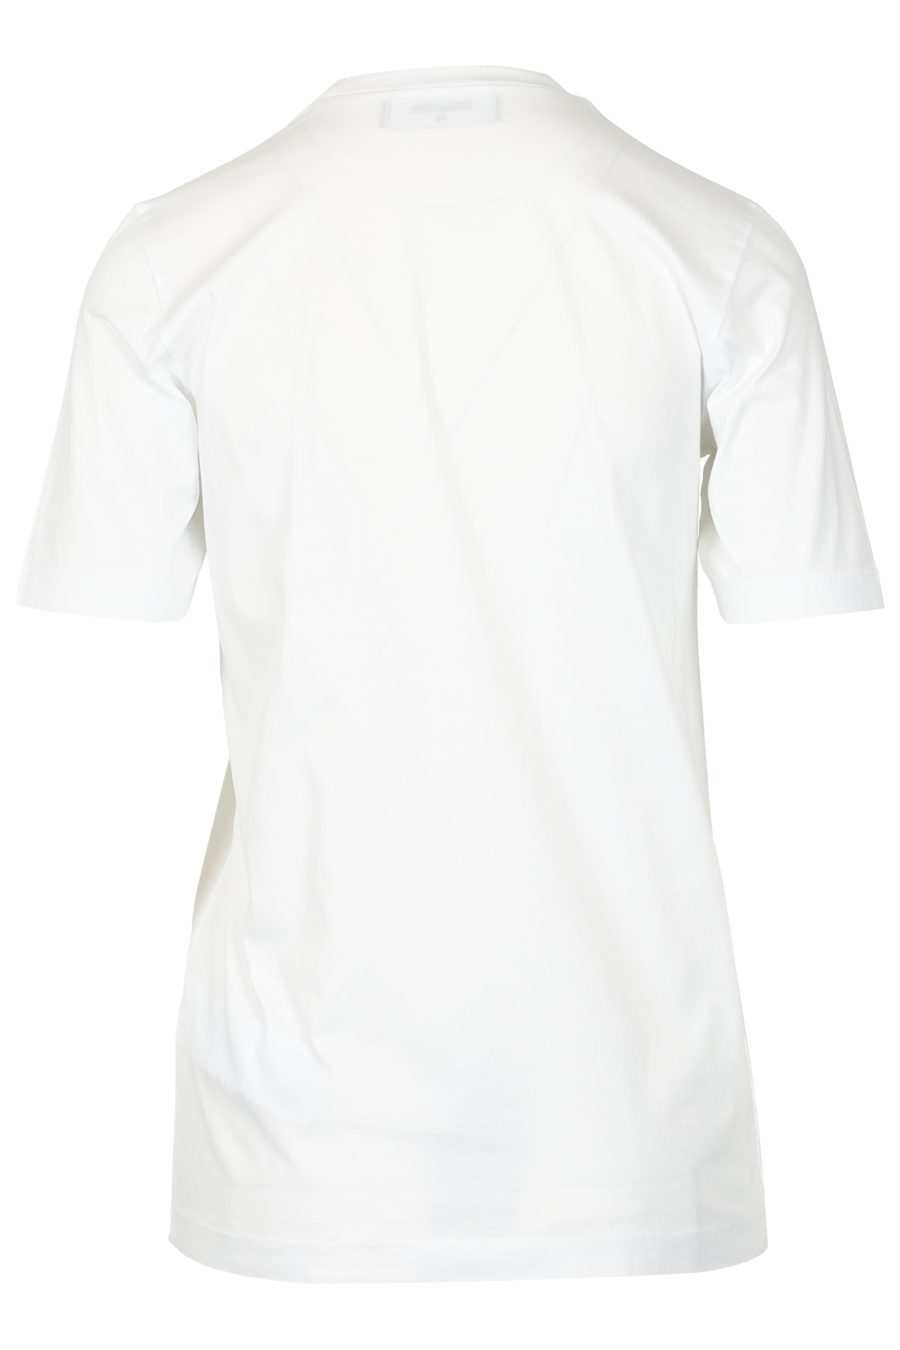 Camiseta de manga corta blanca "Ceresio Milano" - IMG 3273